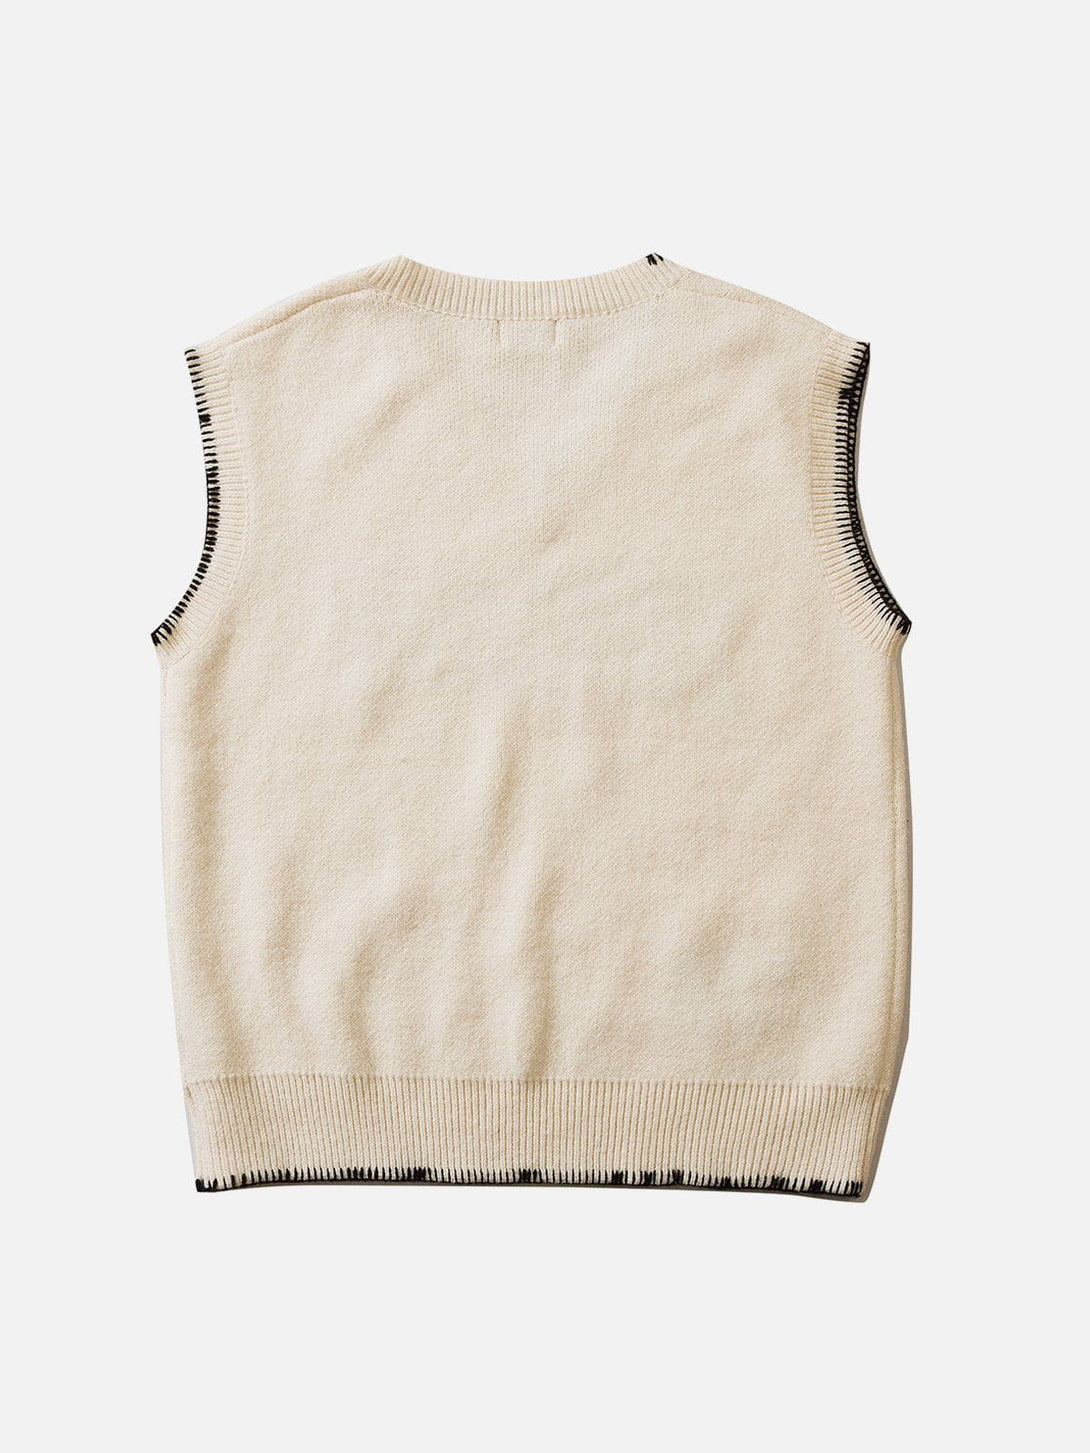 AlanBalen® - Simple Embroidered Letters Sweater Vest AlanBalen